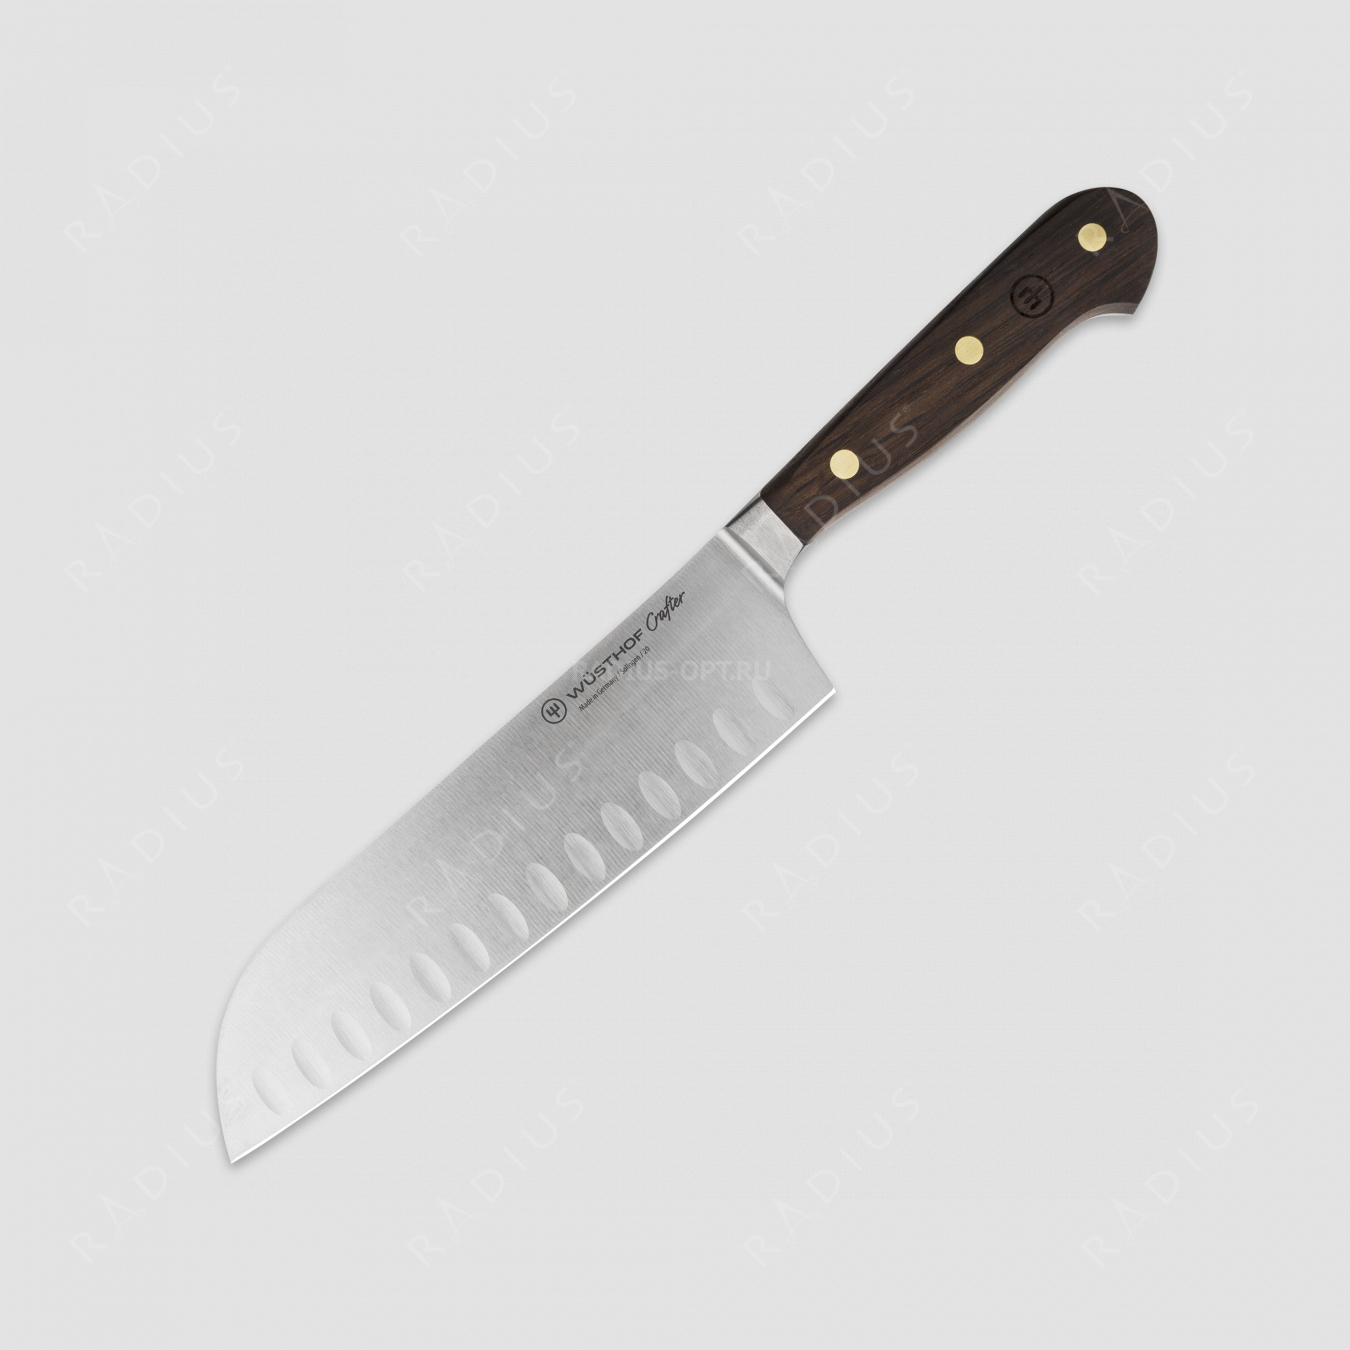 Нож кухонный Сантоку 17 см, серия Crafter, WUESTHOF, Золинген, Германия